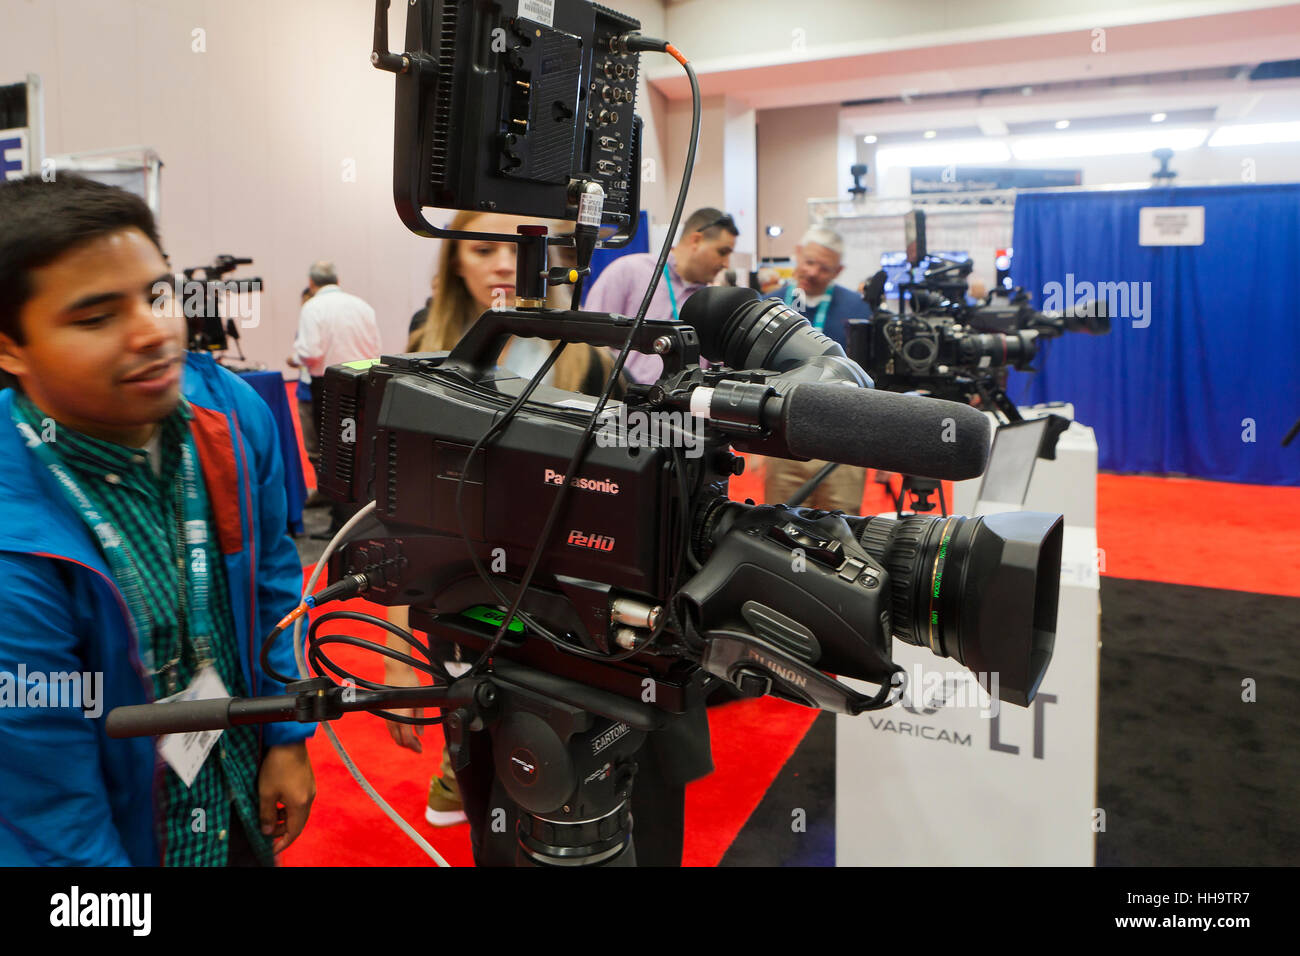 Panasonic Broadcast Video kamera Systeme auf einer Messe - USA Stockfoto